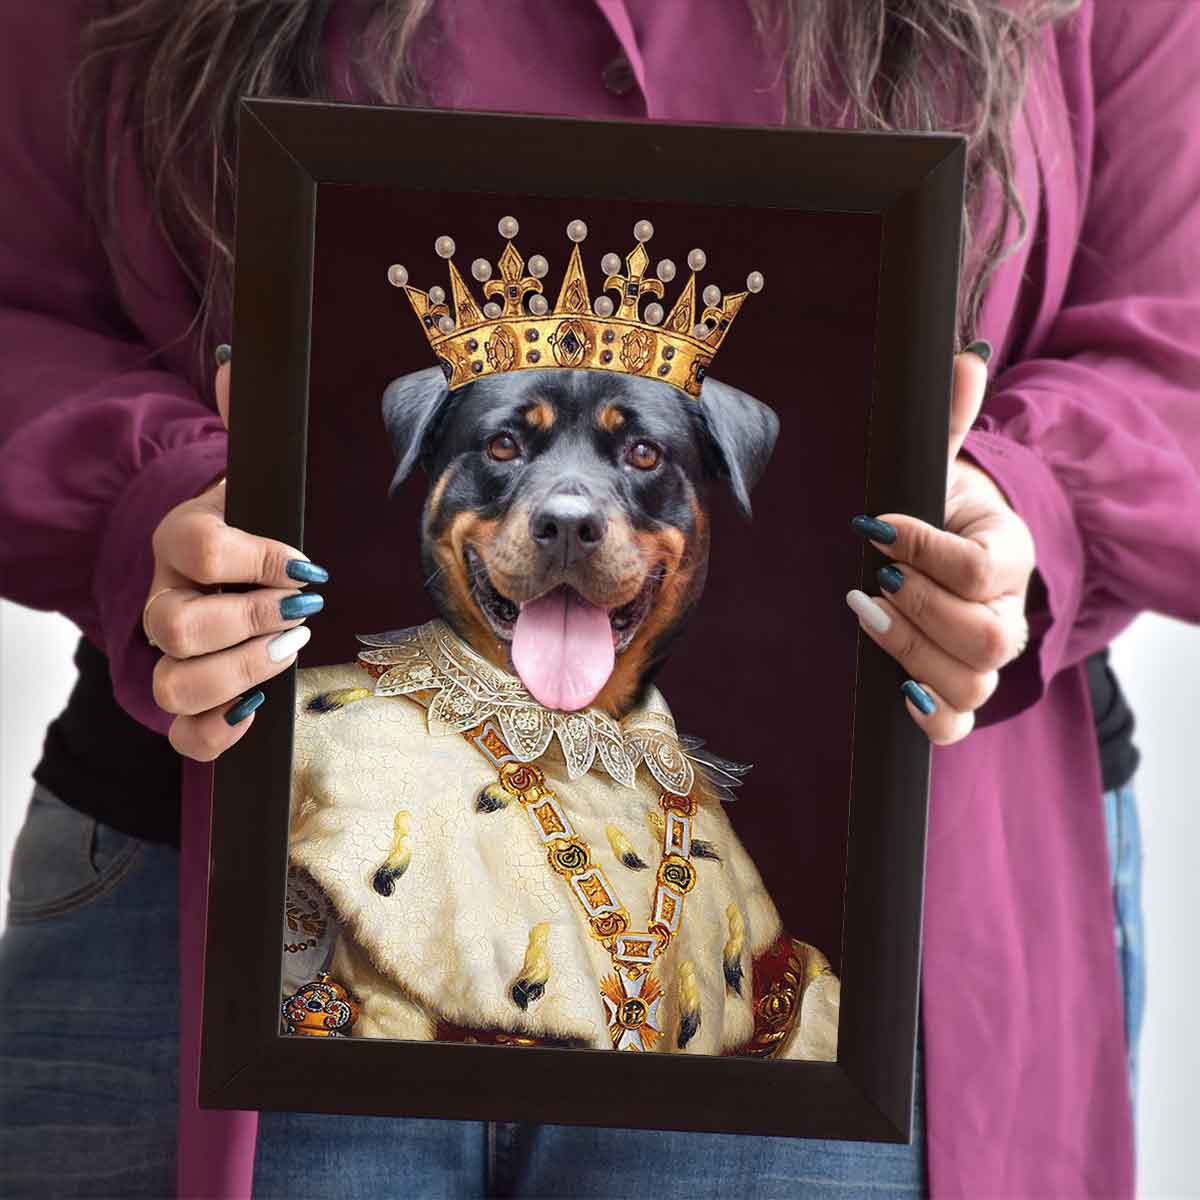 His Highness Digital Portrait Photo Frame